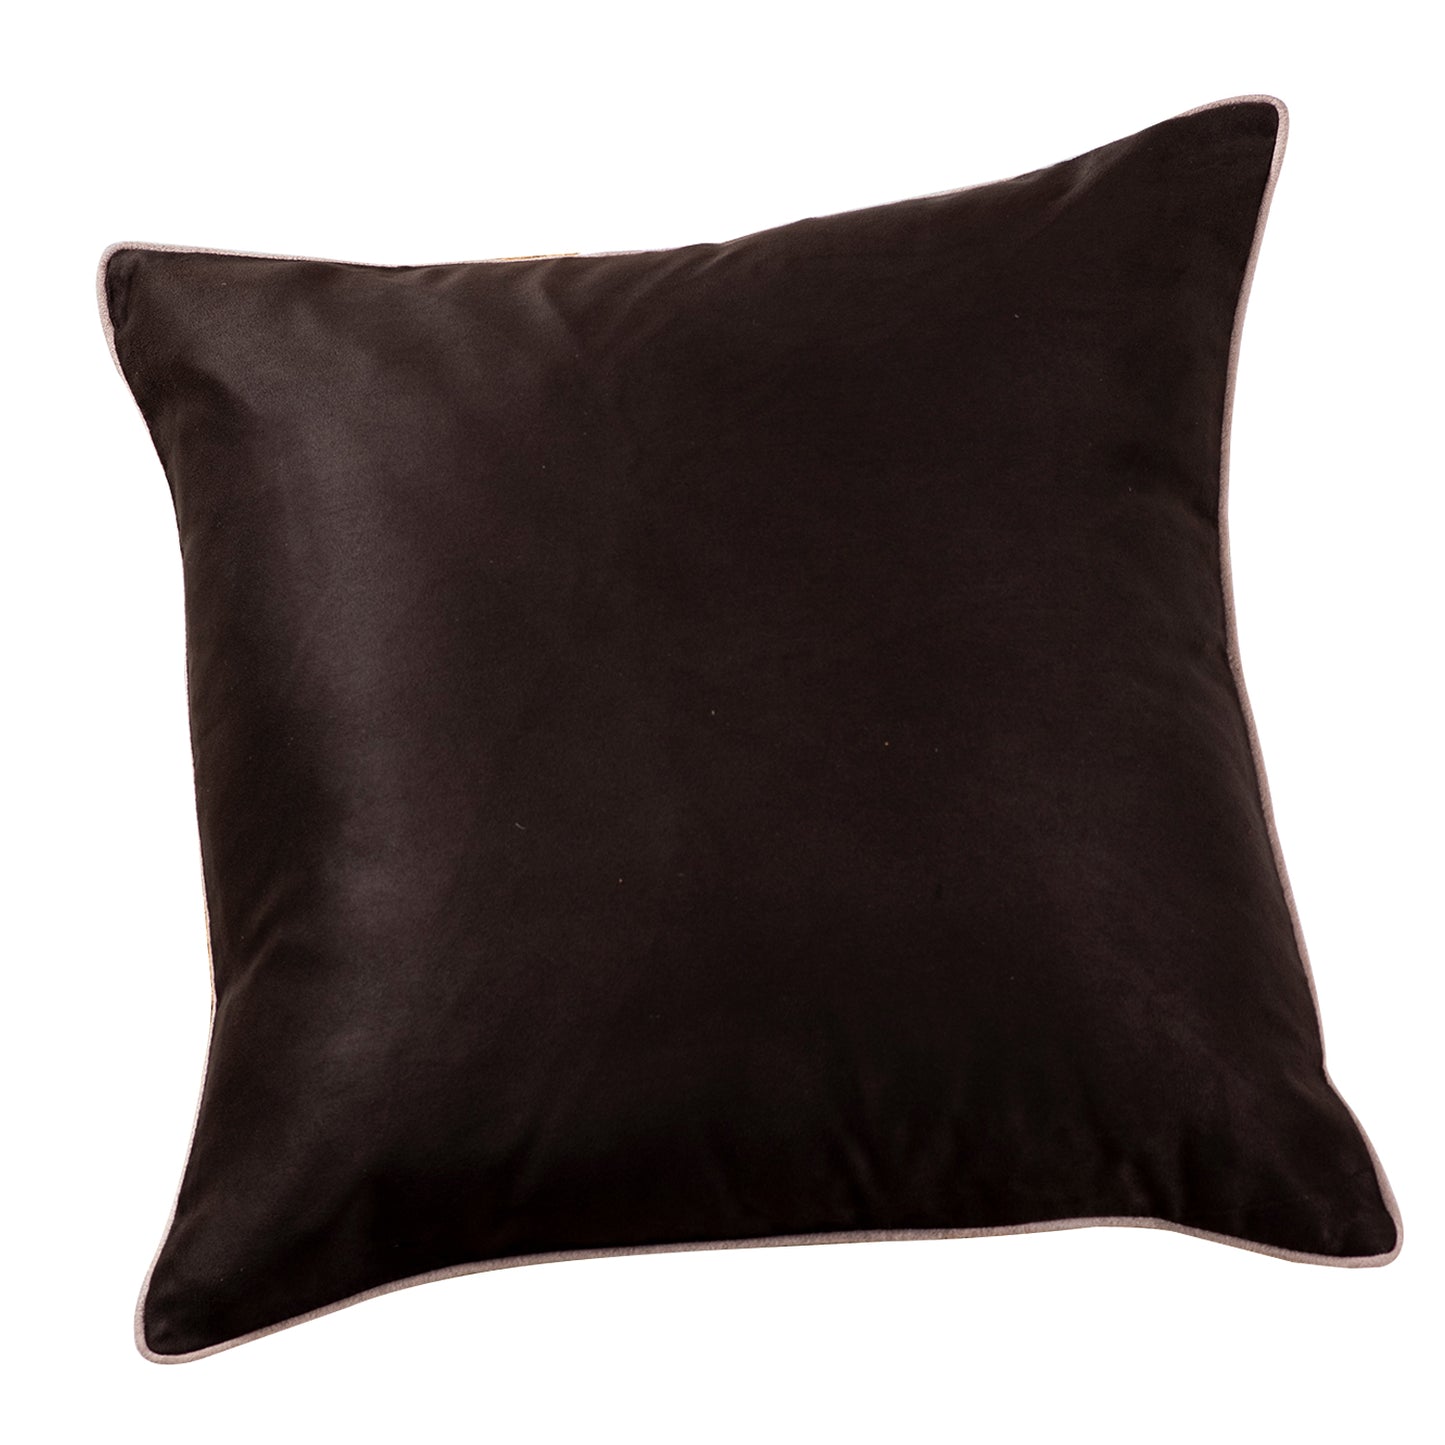 Lush Velvet Cushion Cover Dark Brown 16 X 16 Inches Set of 5